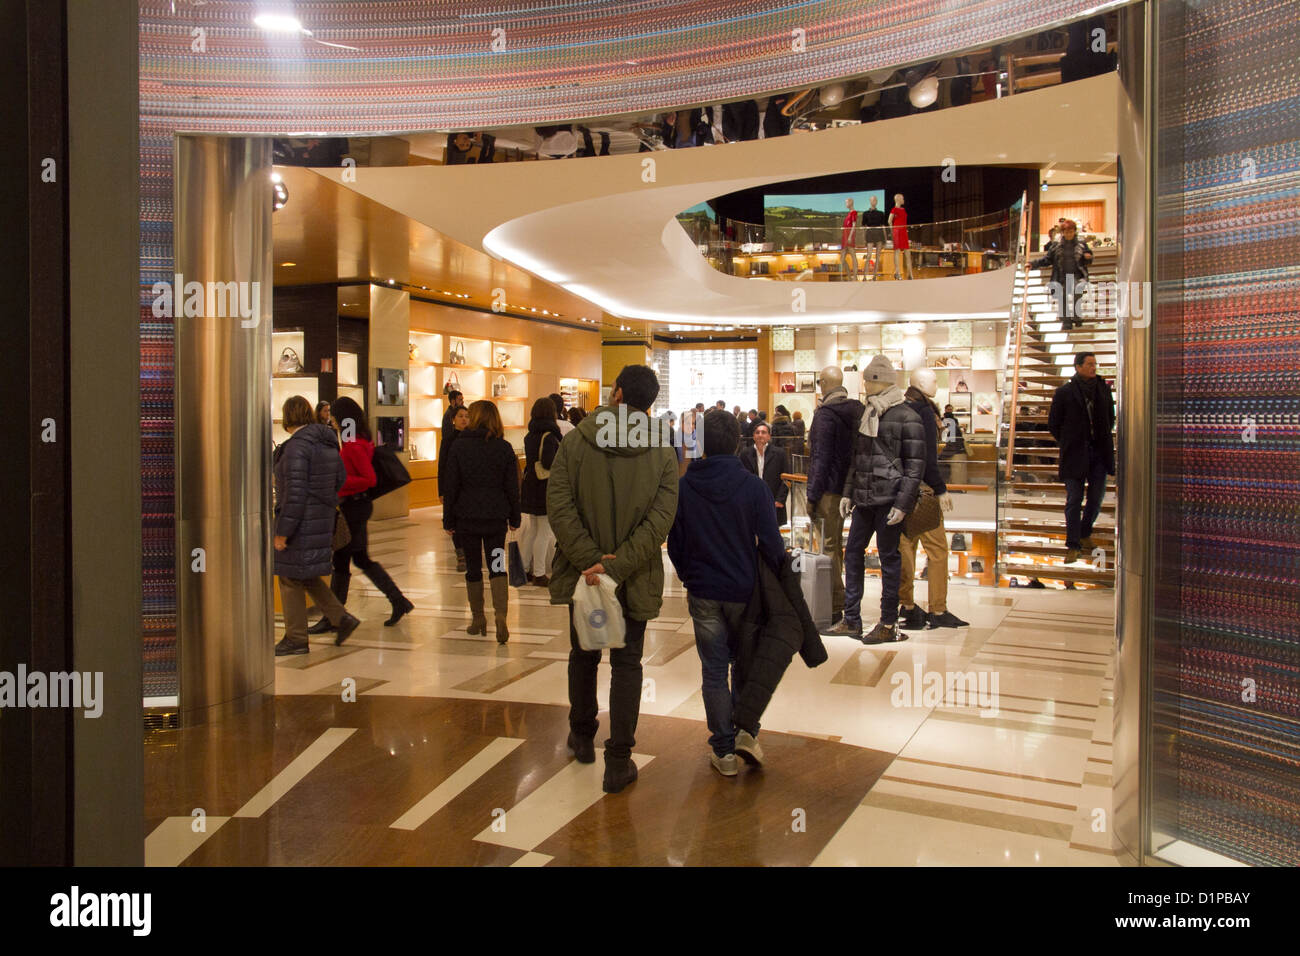 Louis Vuitton store shop Rome Italy shopping Stock Photo - Alamy